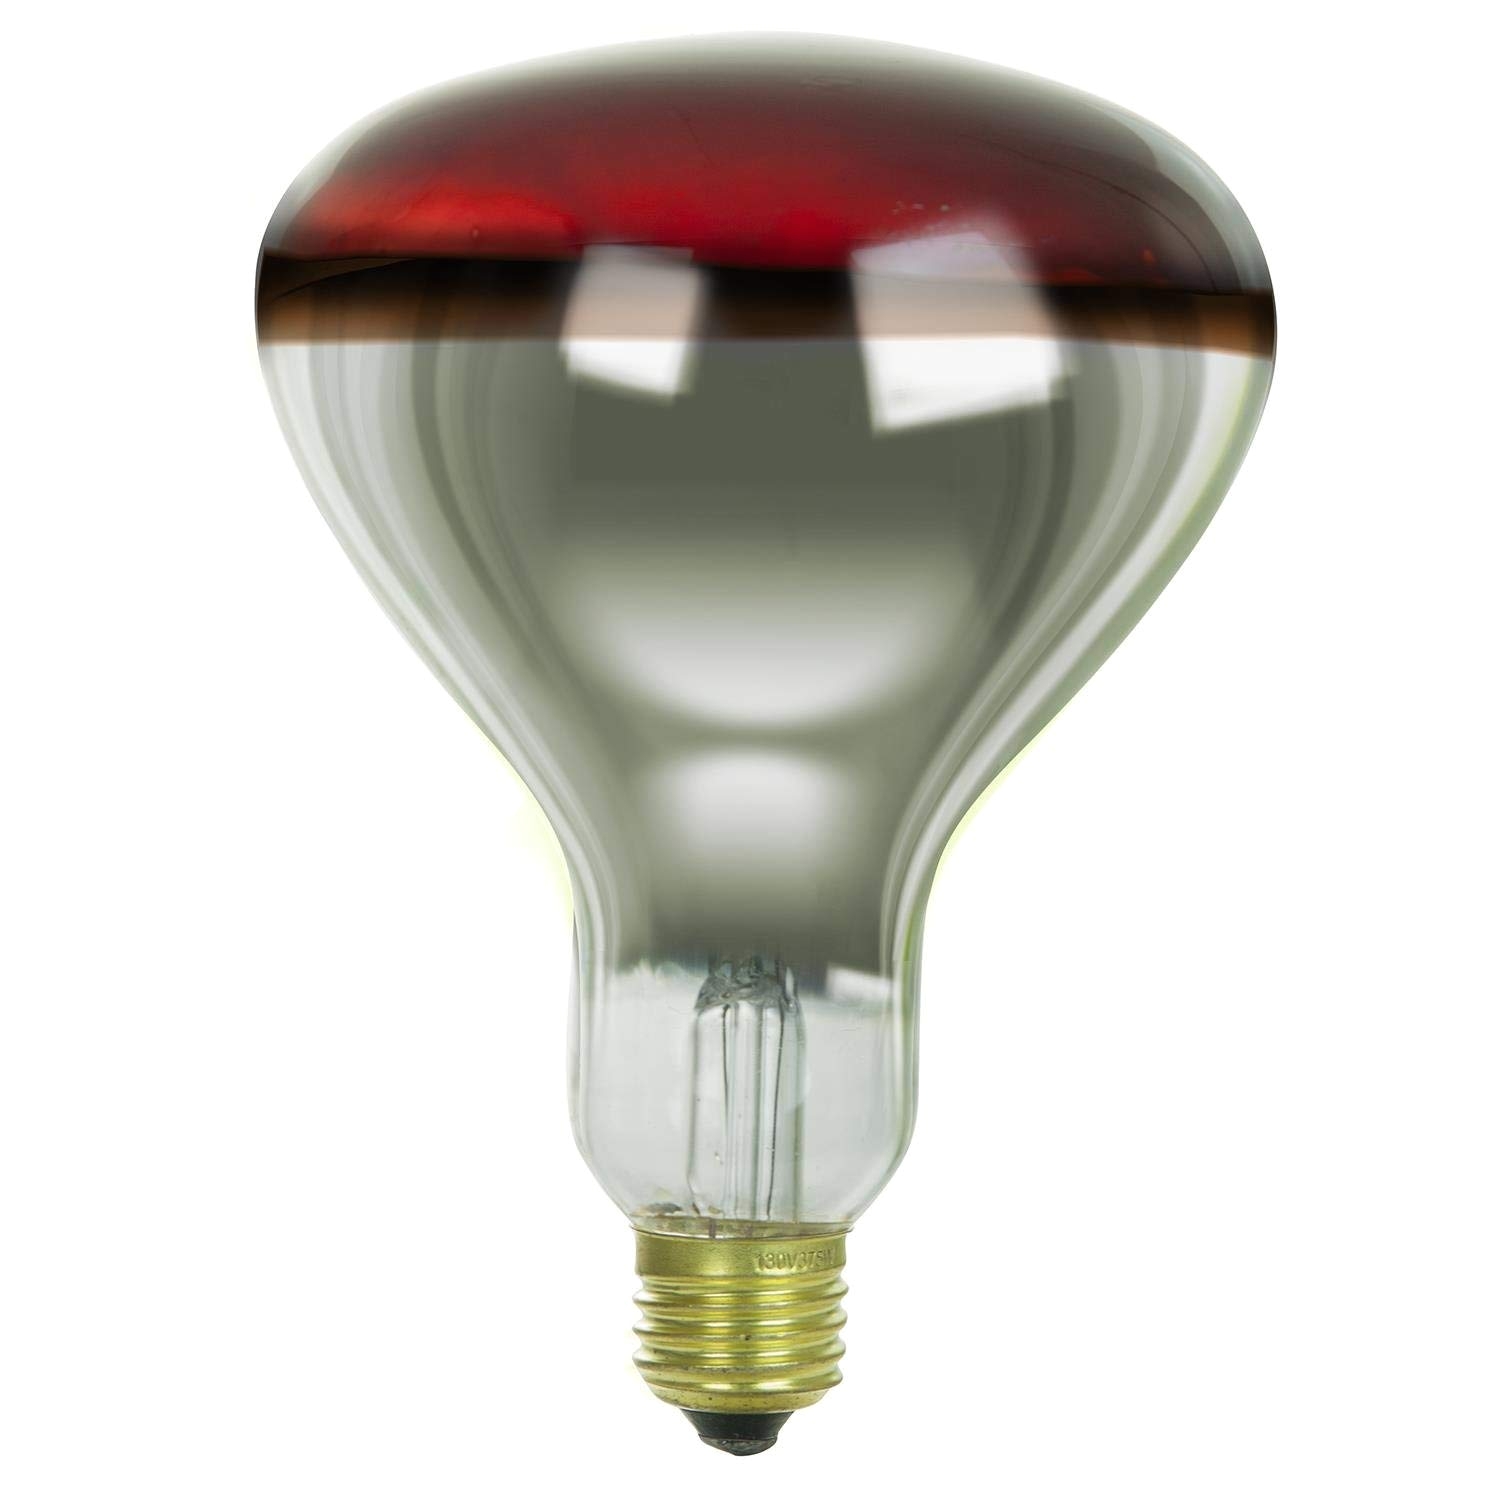 amazon com satco bulbs 64965 heat lamps 250 watts r40 reflector infrared light red medium e26 base incandescent heat lamp light bulb 250br40 red 2 pack